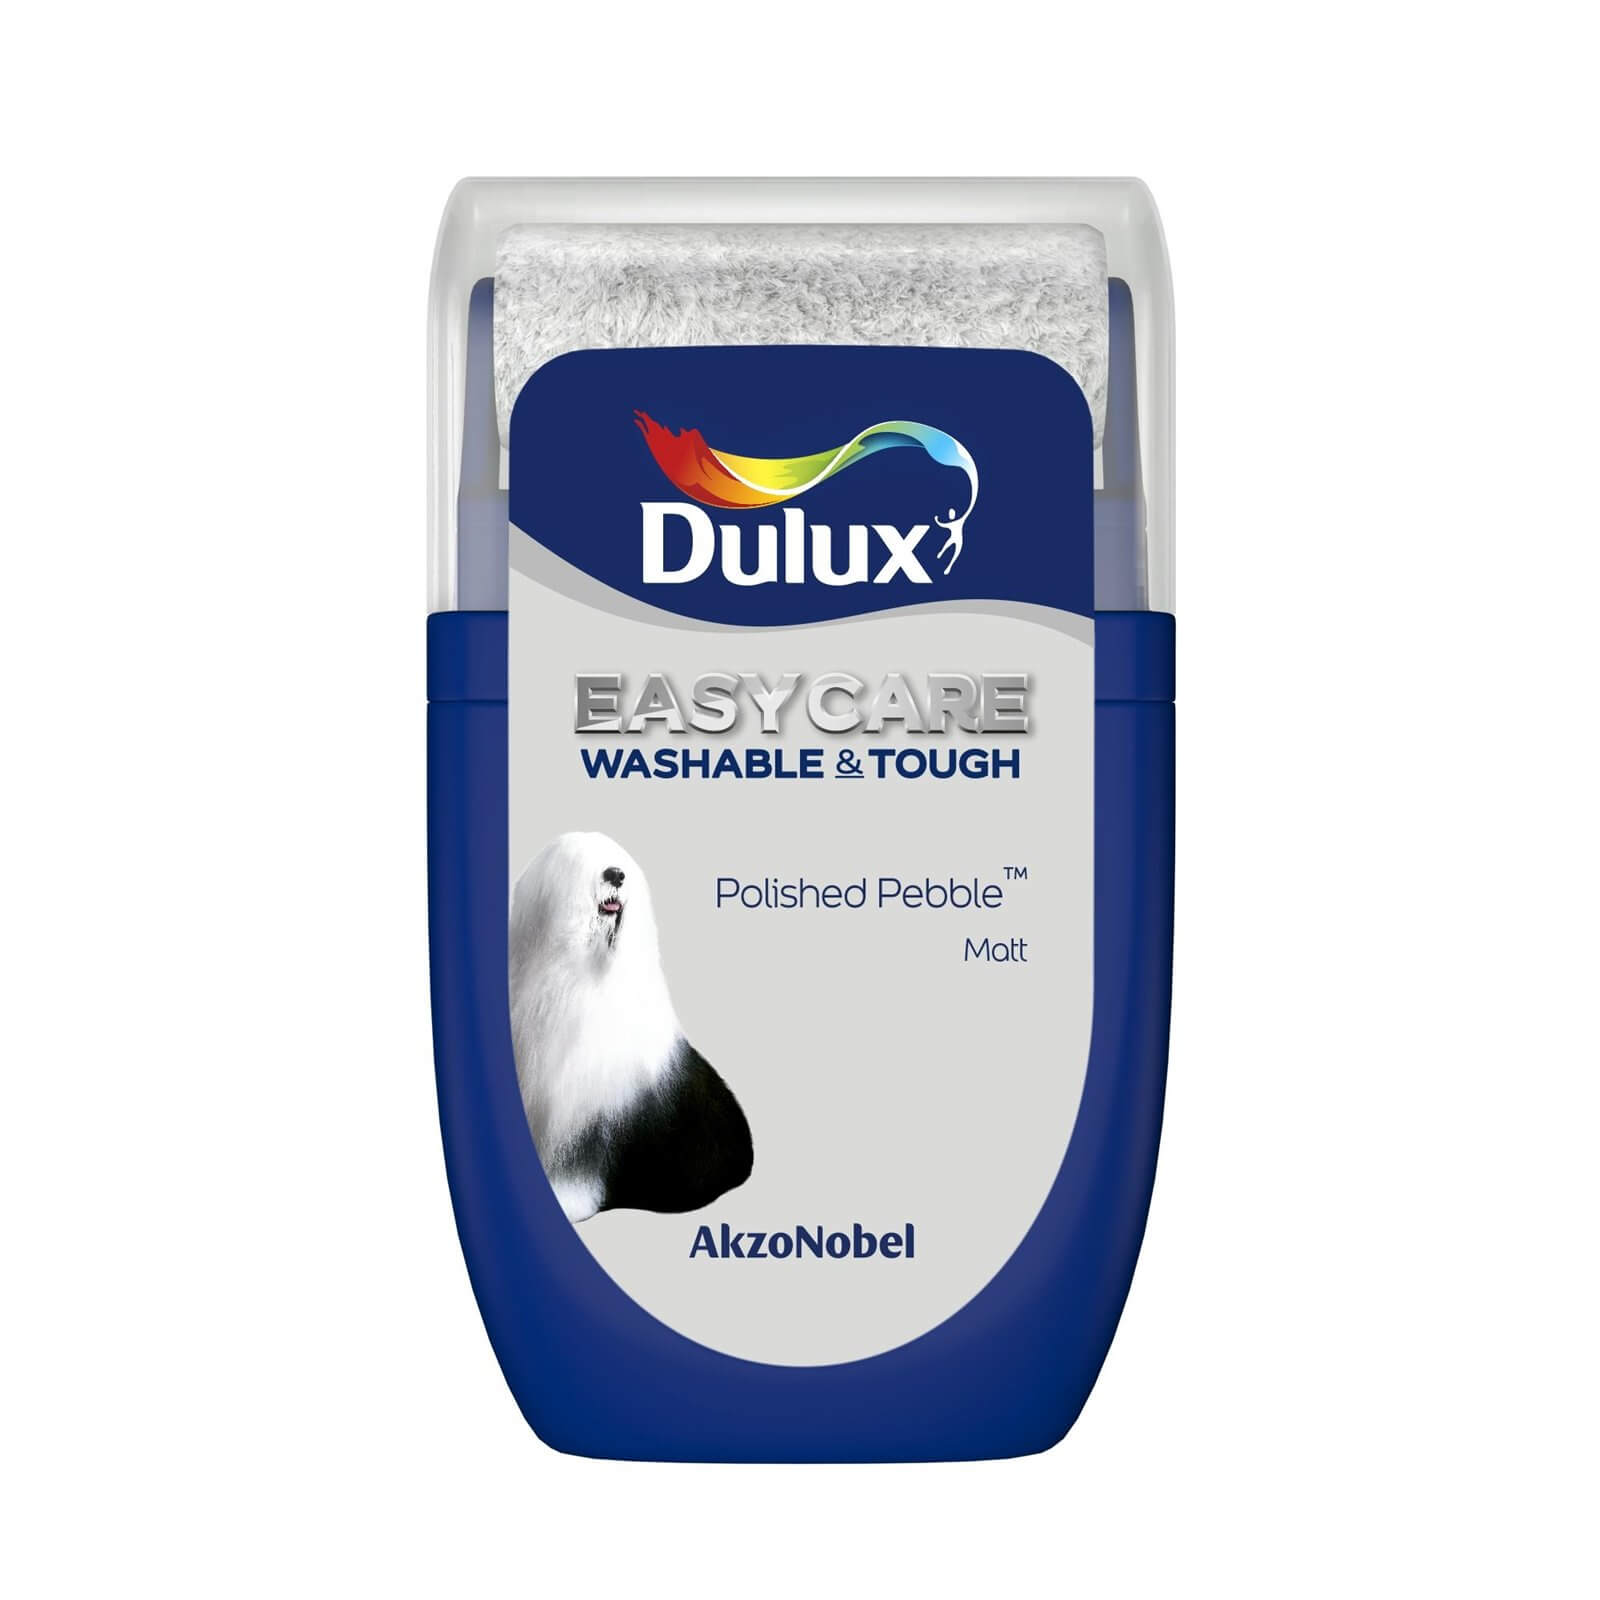 Dulux Easycare Washable & Tough Matt Paint Polished Pebble - Tester 30ml